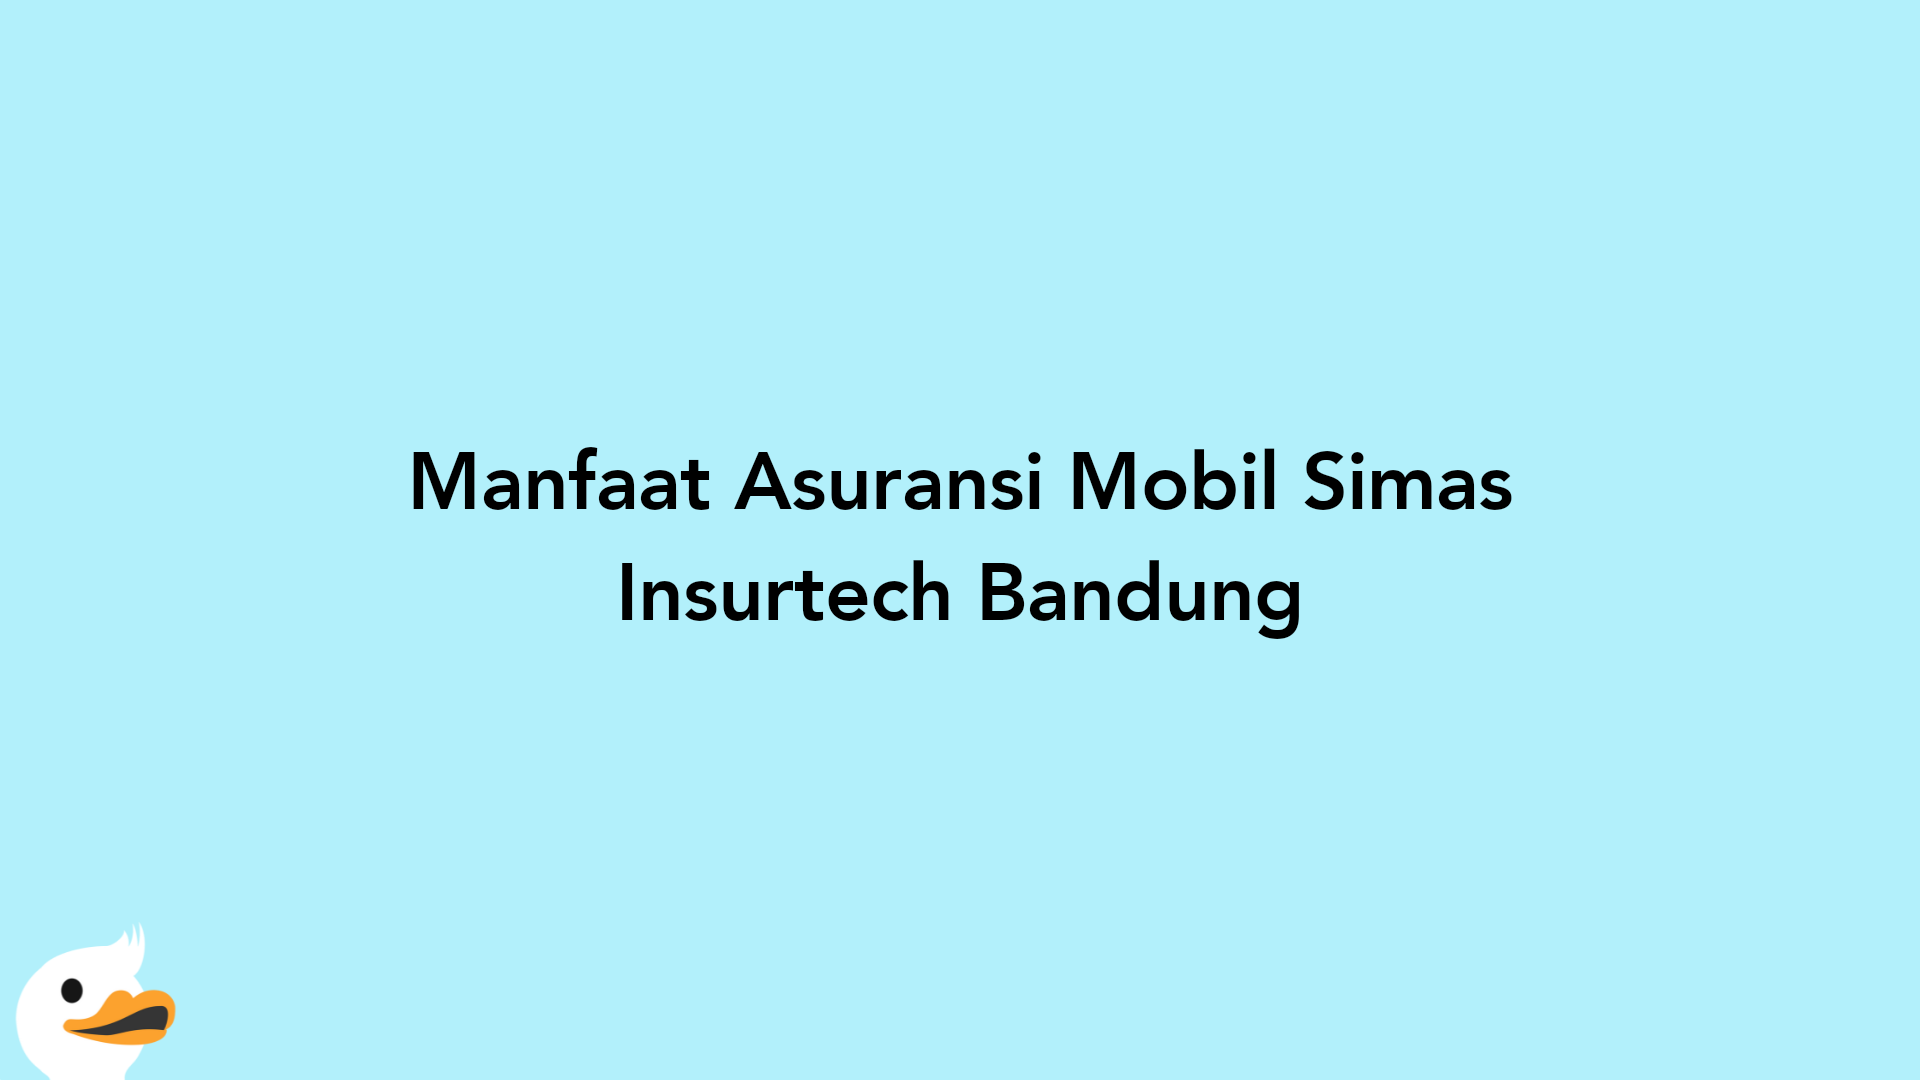 Manfaat Asuransi Mobil Simas Insurtech Bandung